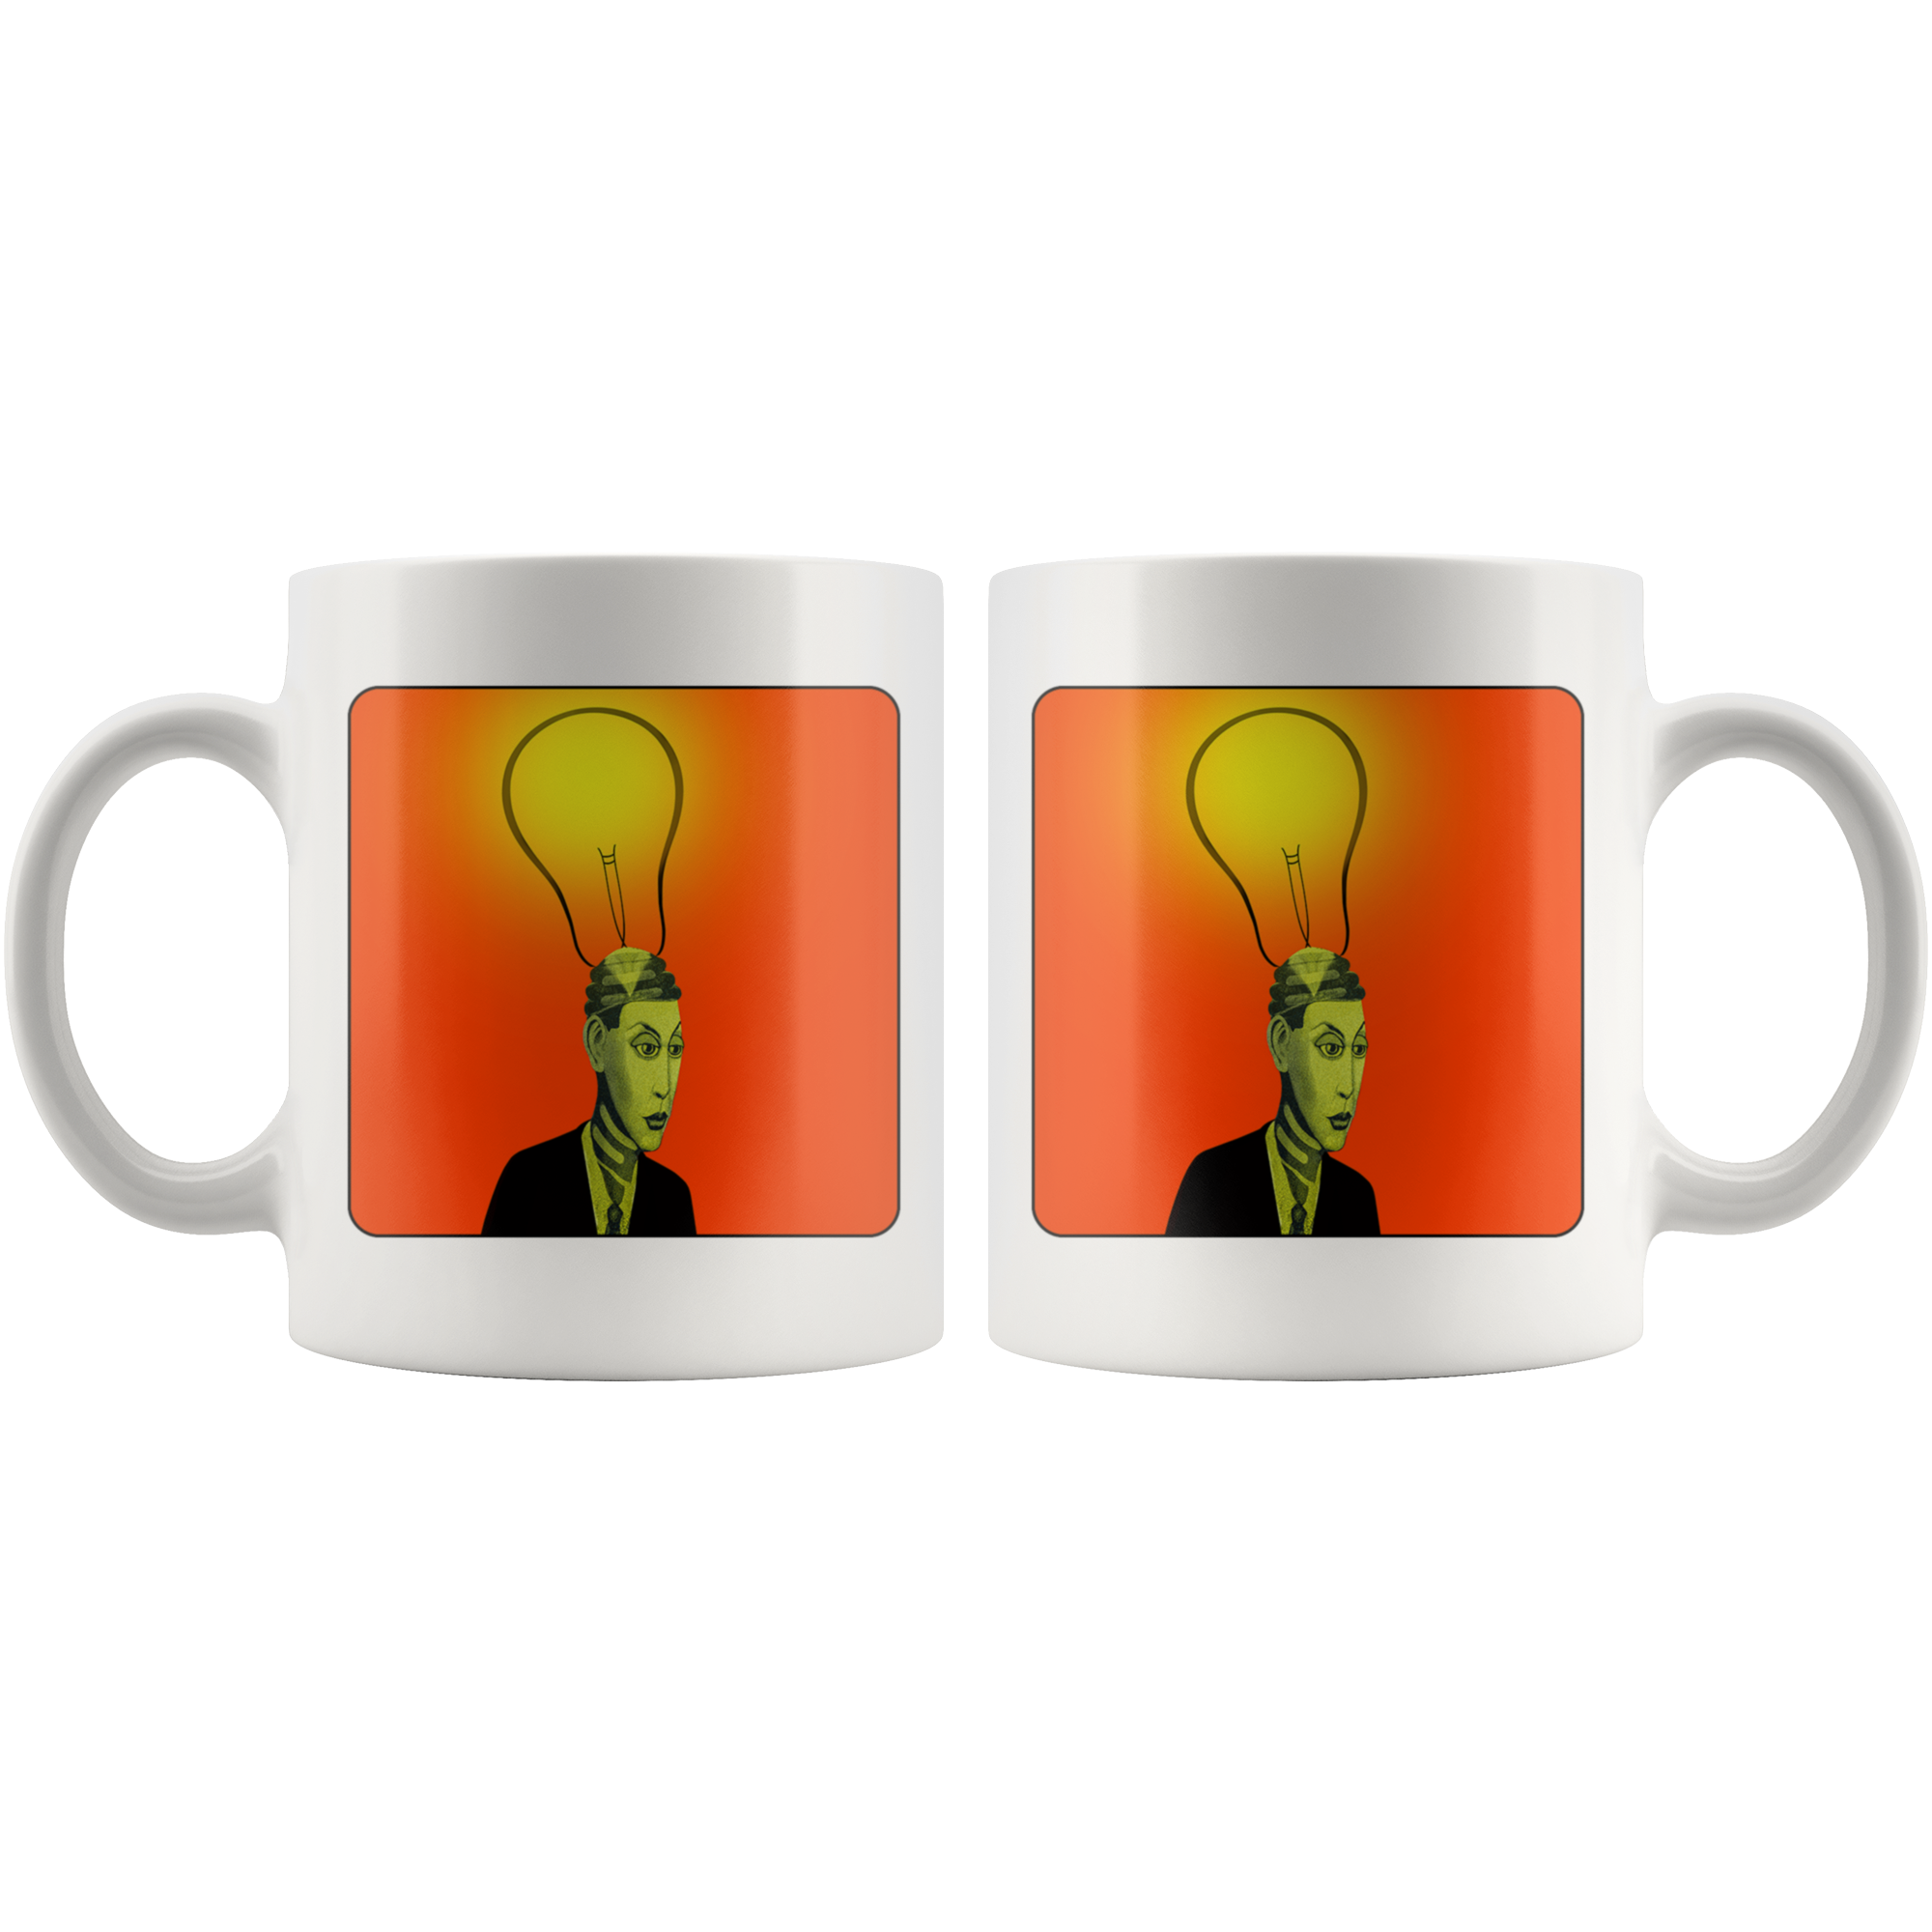 Bright Idea - 11 oz mug